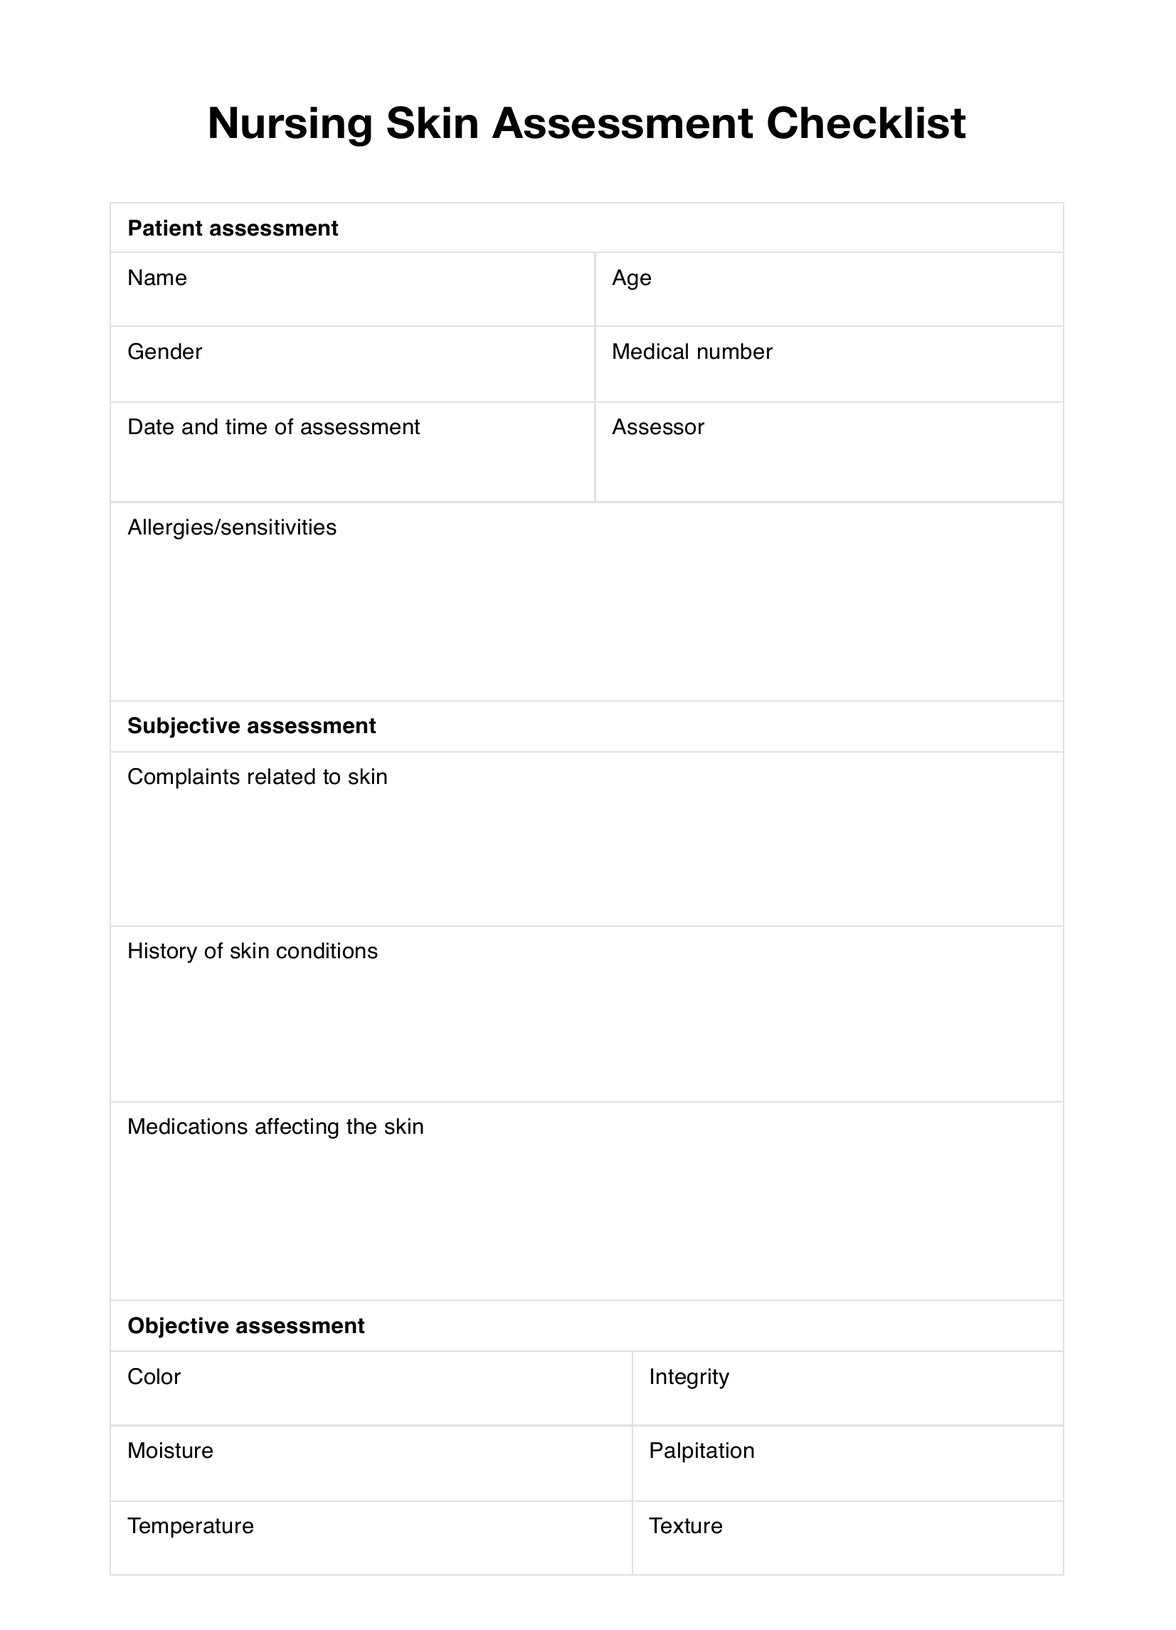 Nursing Skin Assessment Checklist PDF Example